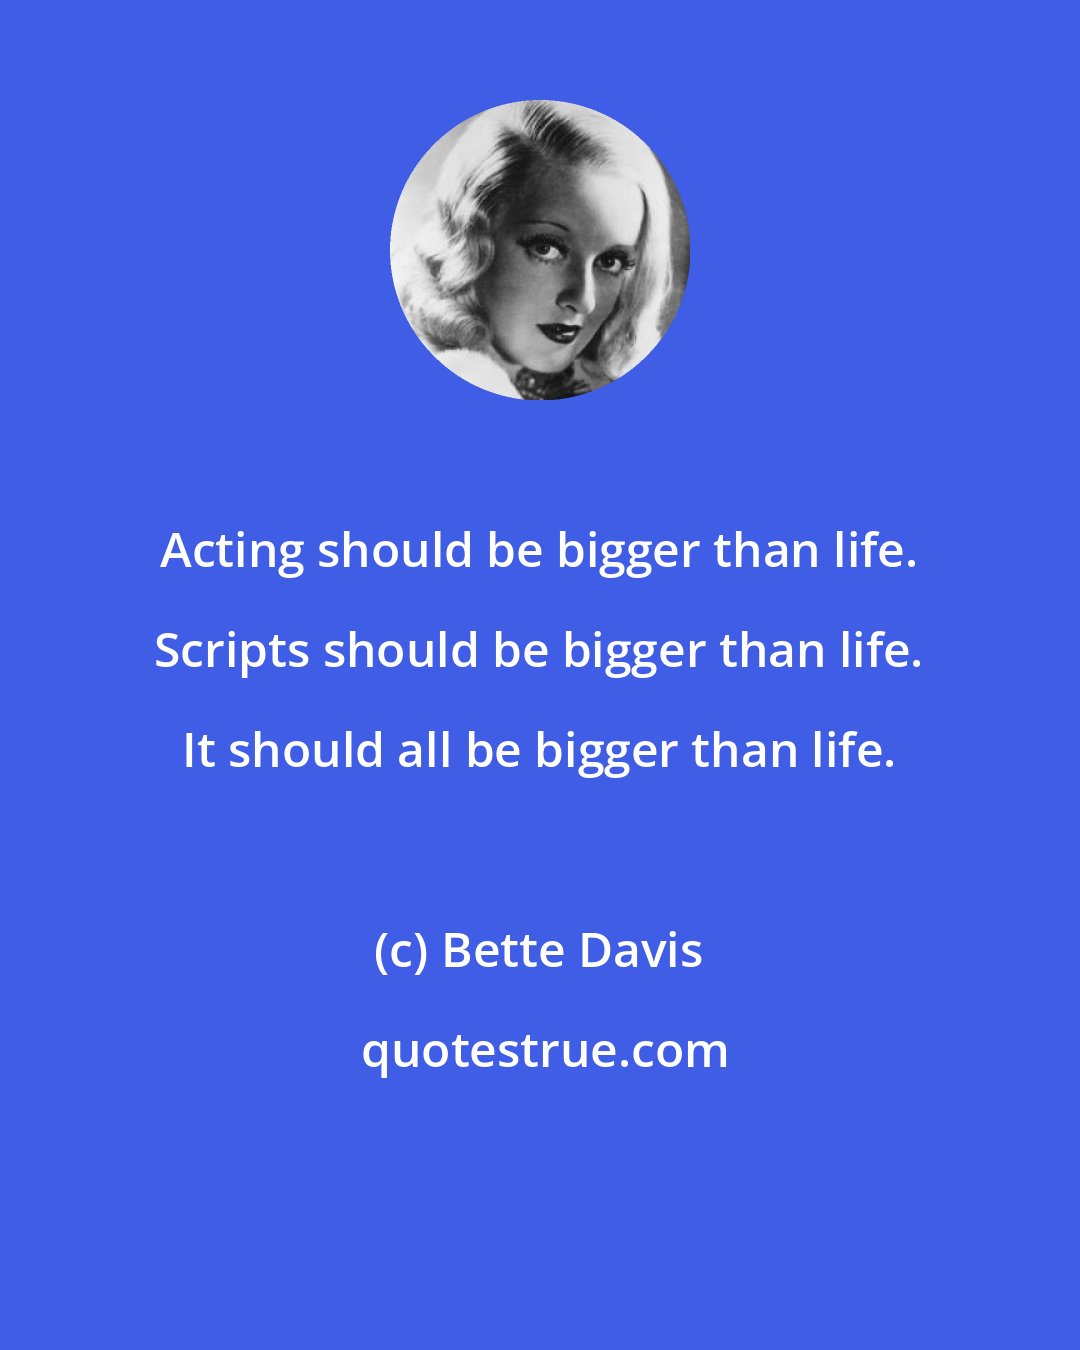 Bette Davis: Acting should be bigger than life. Scripts should be bigger than life. It should all be bigger than life.